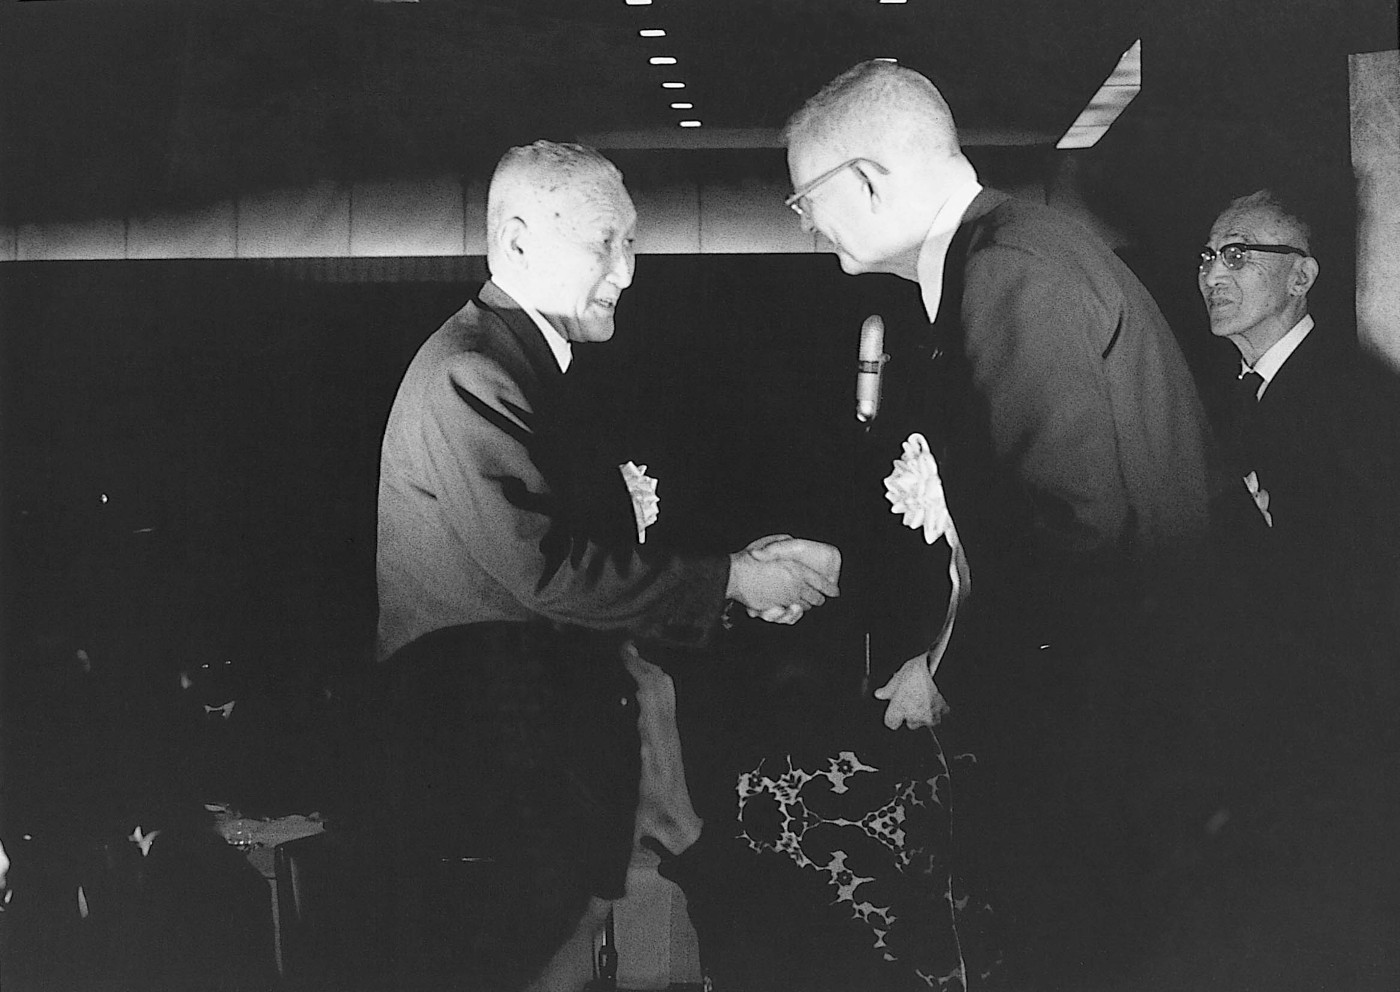 Профессор Деминг и президент
           Toyota Фукио Накагава на церемонии вручения премии Деминга (1965)